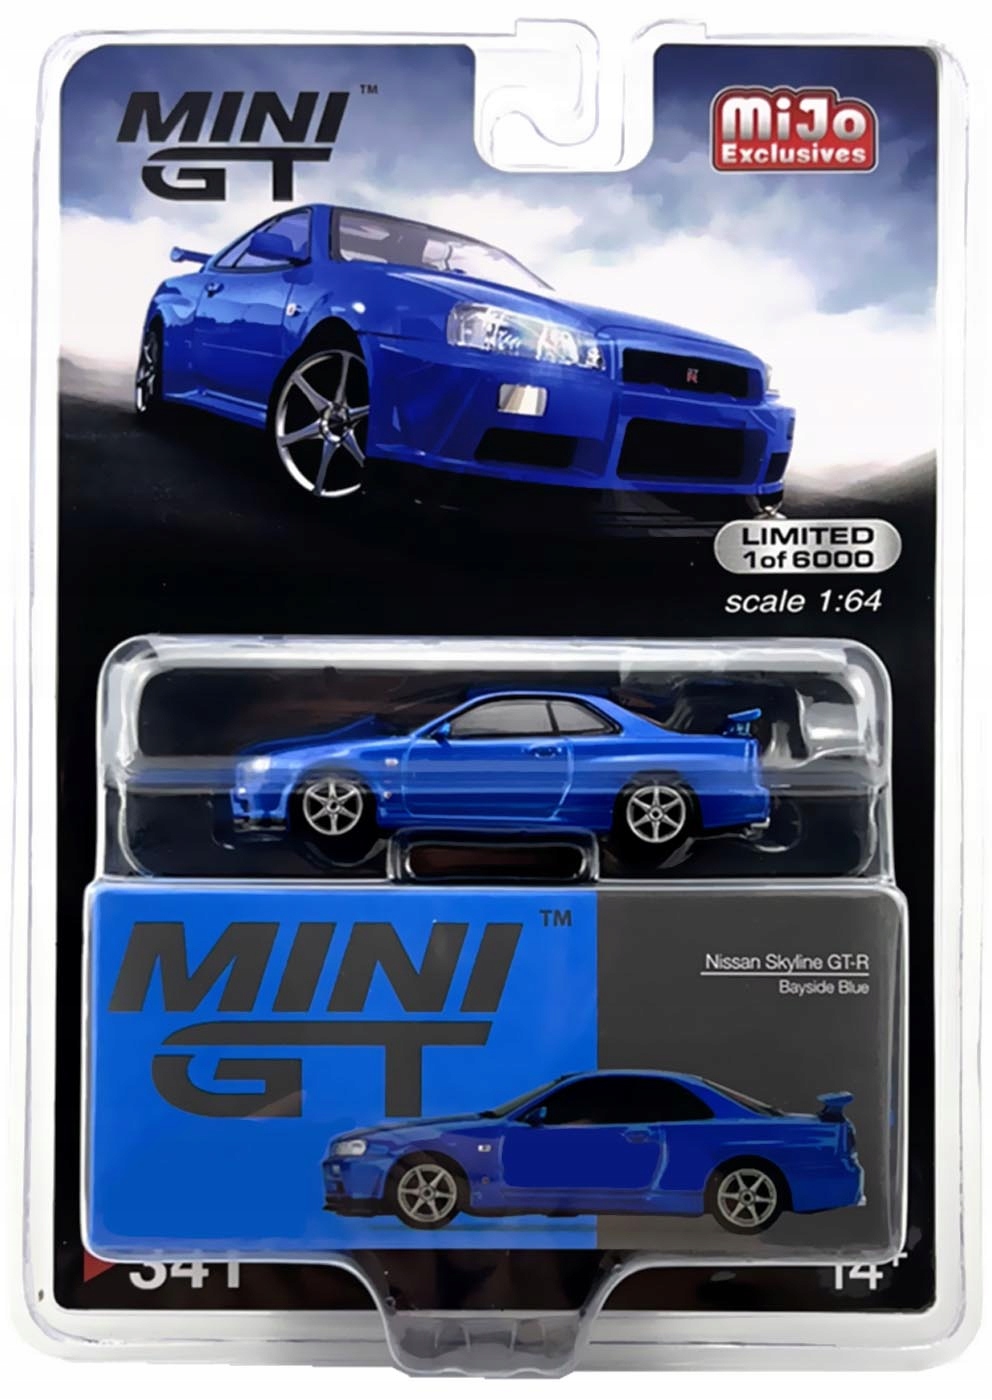 MINI GT NISSAN SKYLINE GT-R R34 Bayside BLUE 341